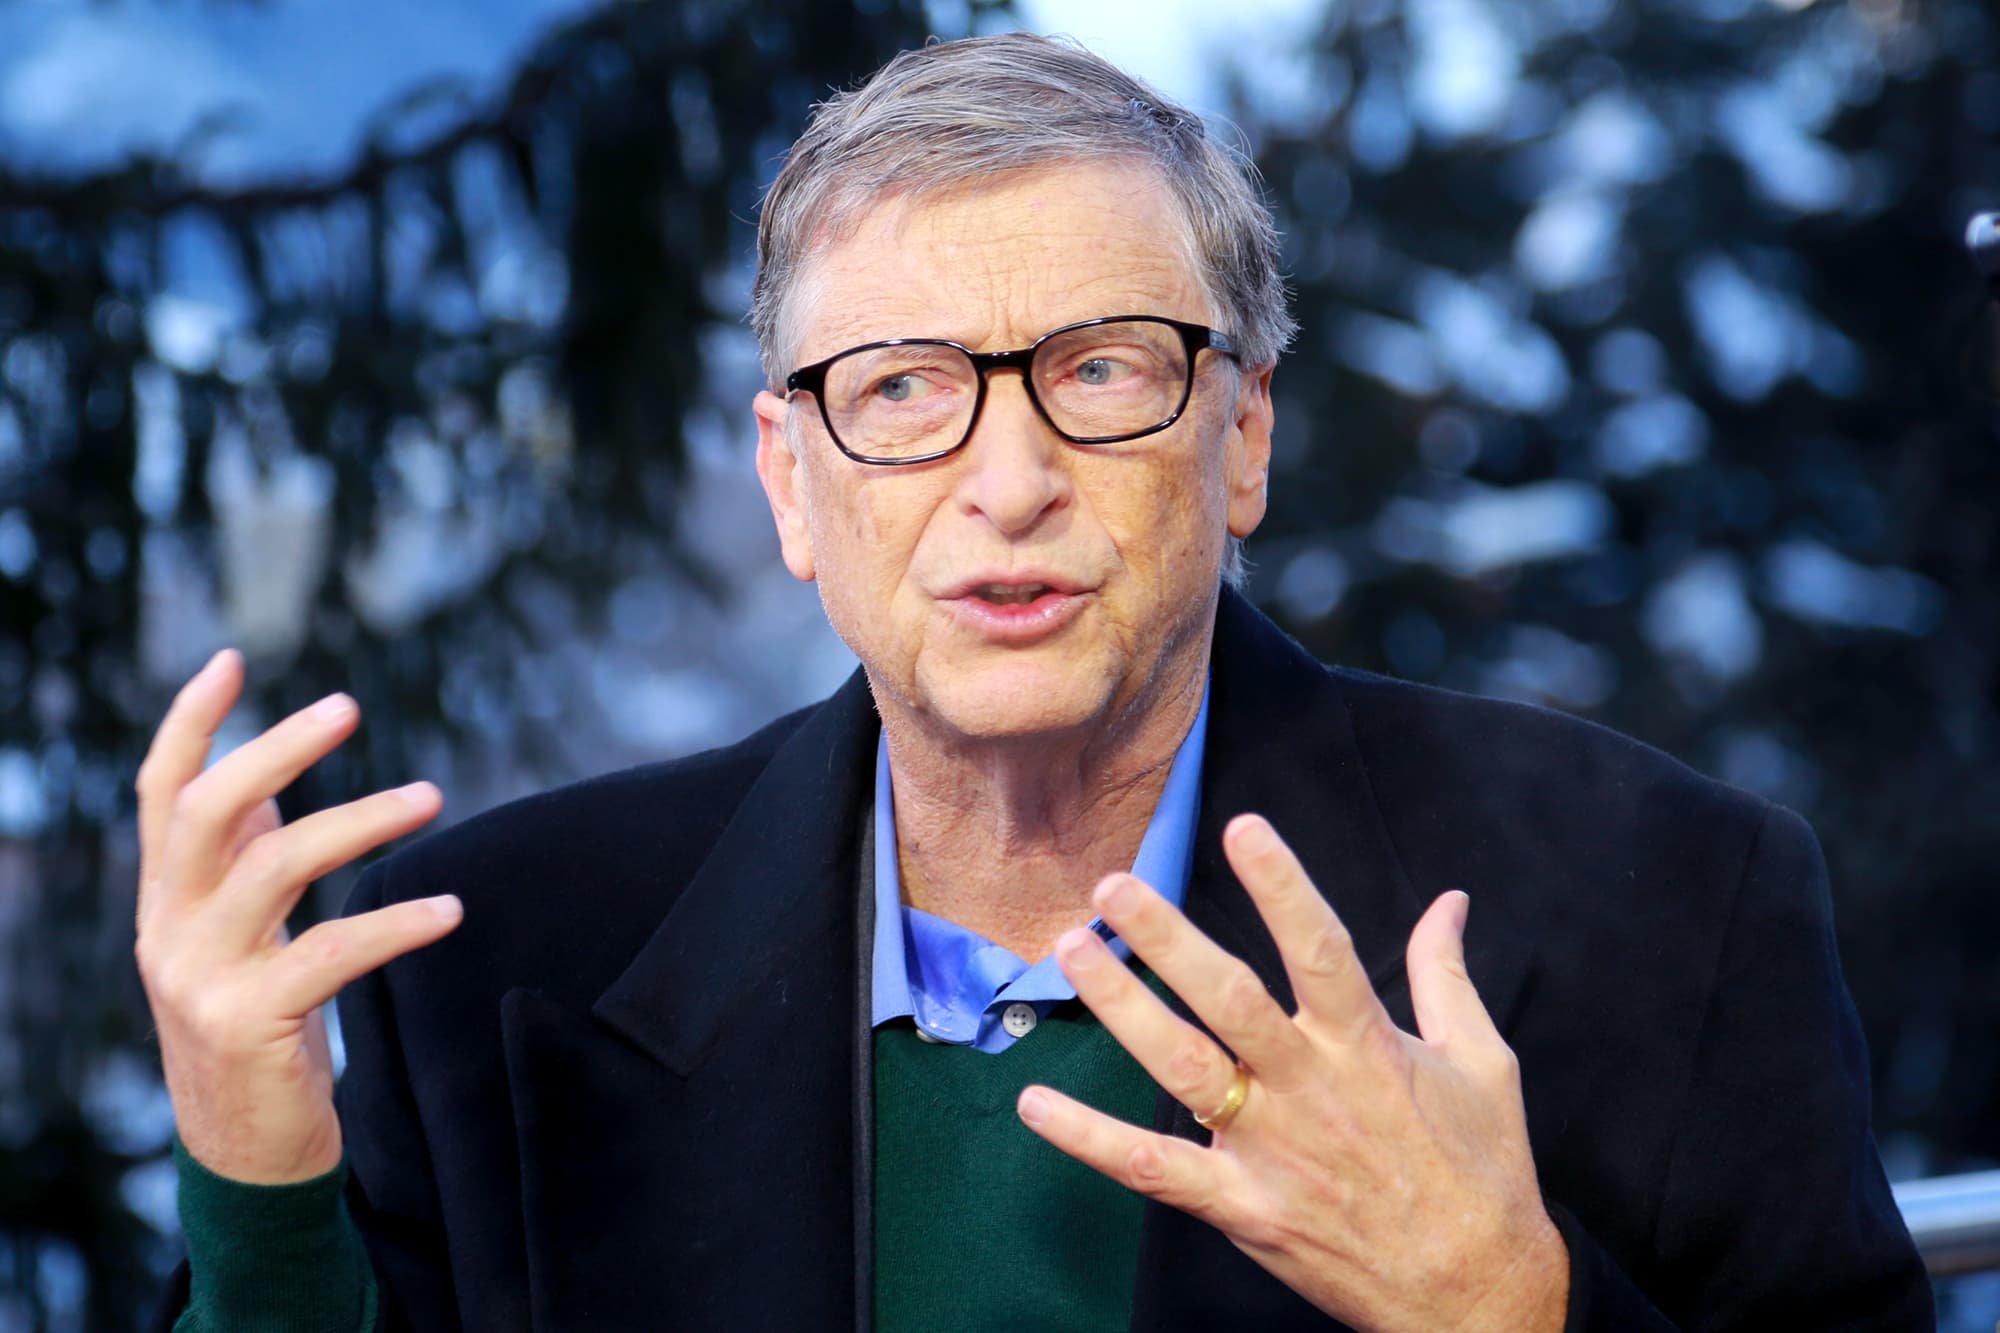 Bill Gates likens Reddit’s GameStop stock frenzy to gambling